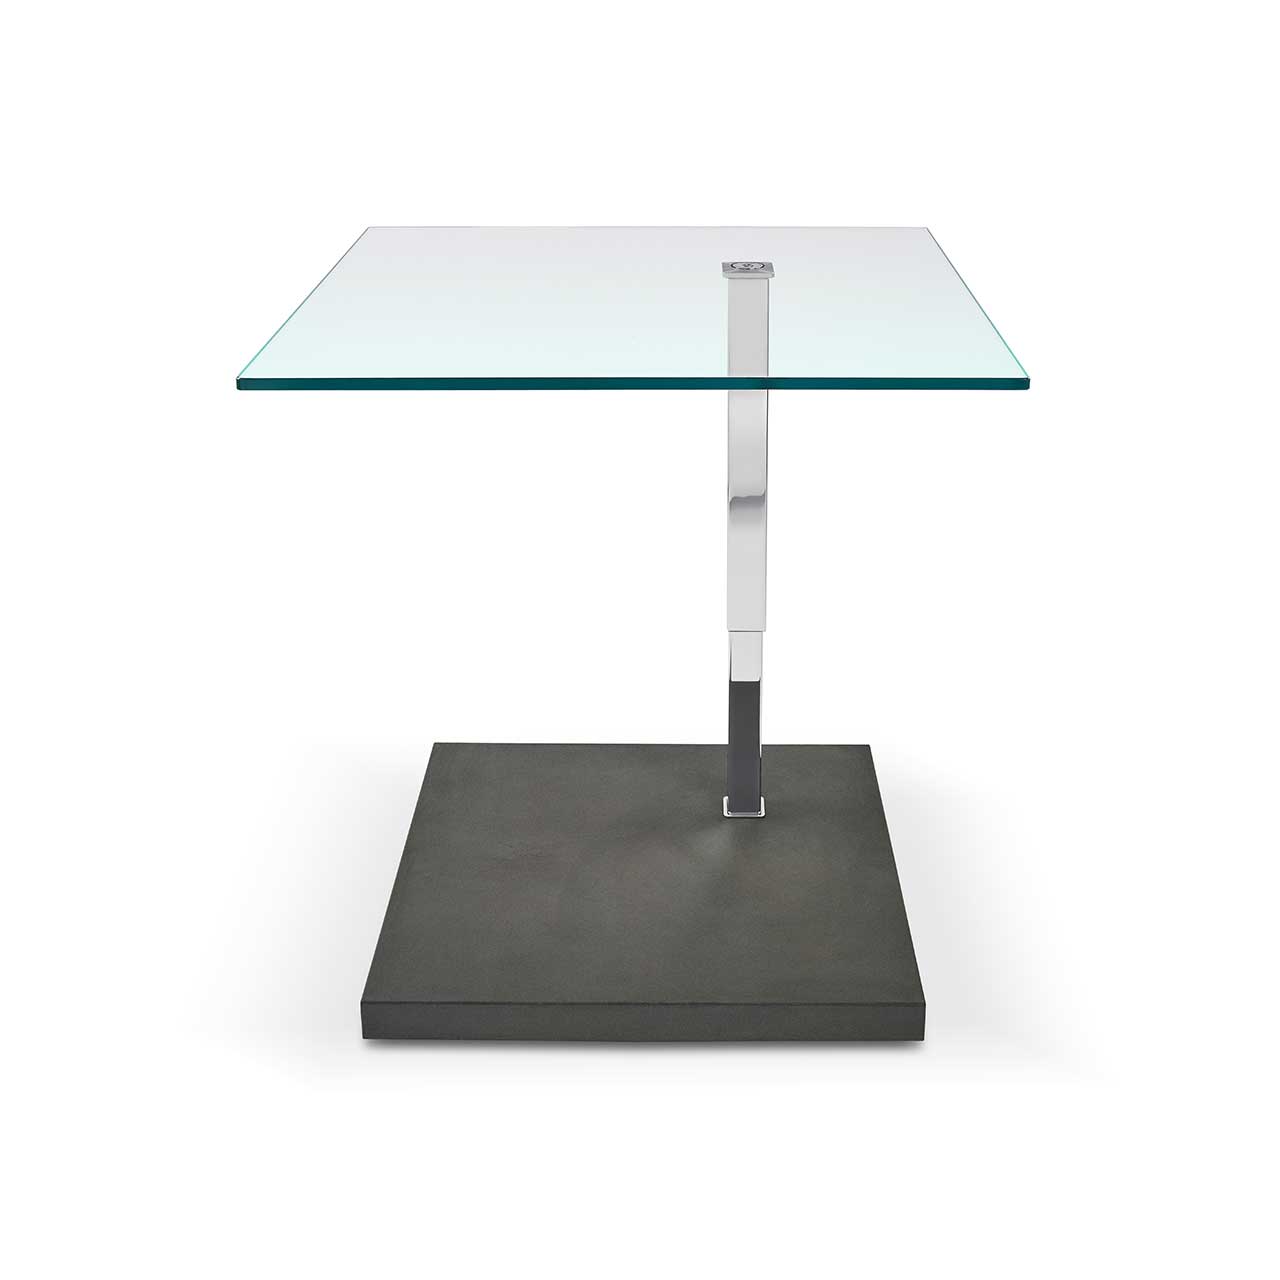 Ronald Schmitt – Beistelltisch Jacky K 926 - oben | Tischplatte Floatglas, Sockel Betonoptik dark